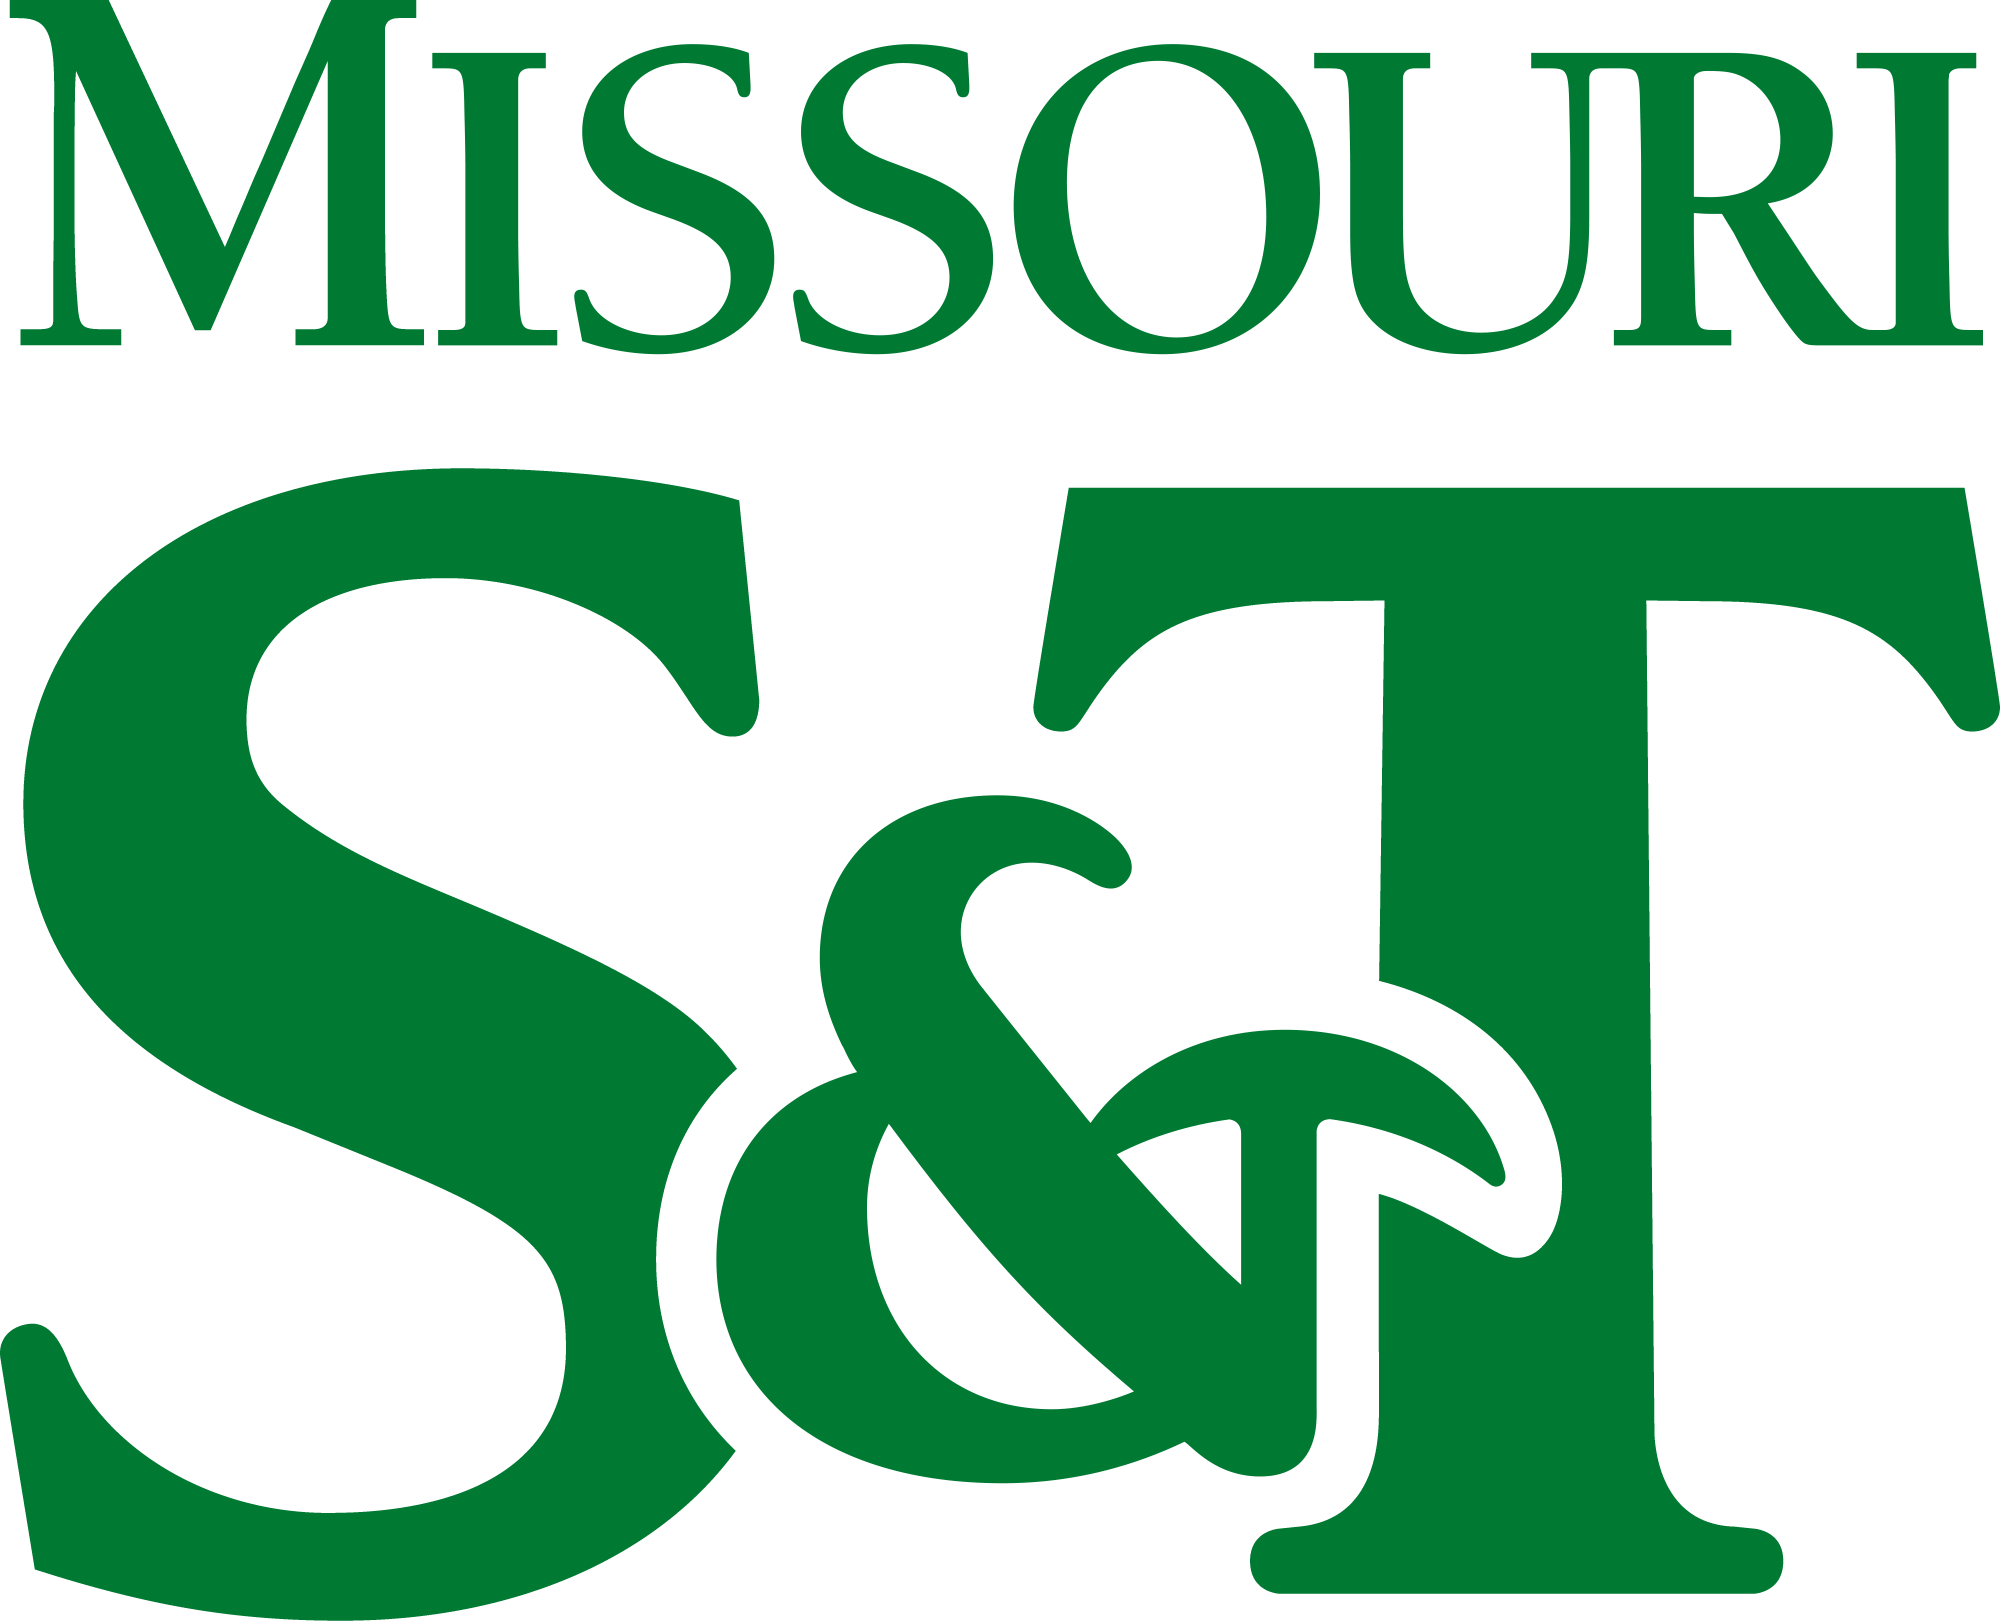 Missouri S&T logo, logotype